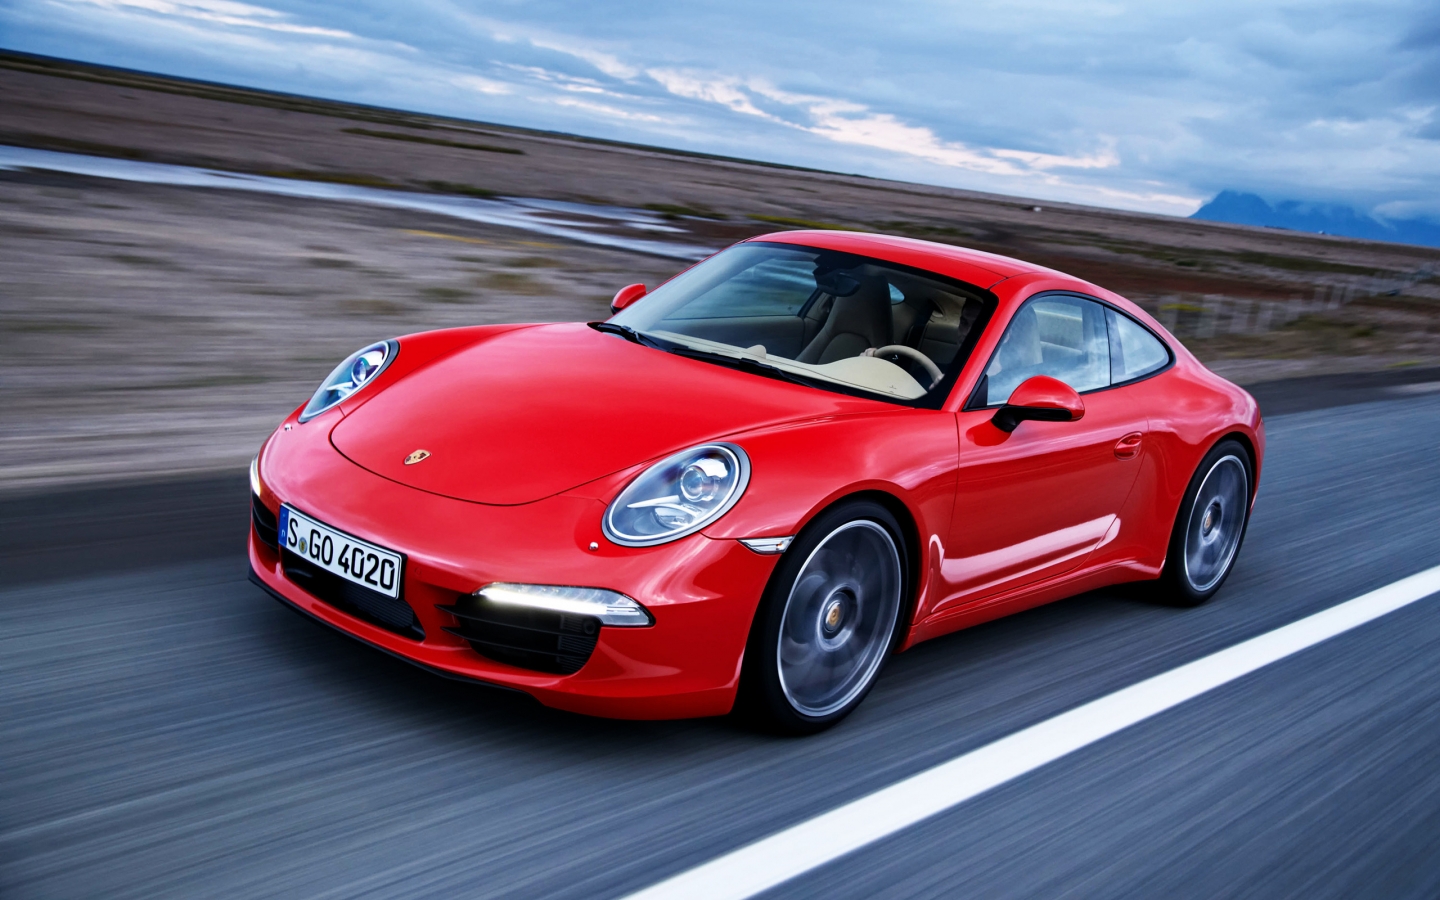 2012 Porsche 911 Carrera for 1440 x 900 widescreen resolution